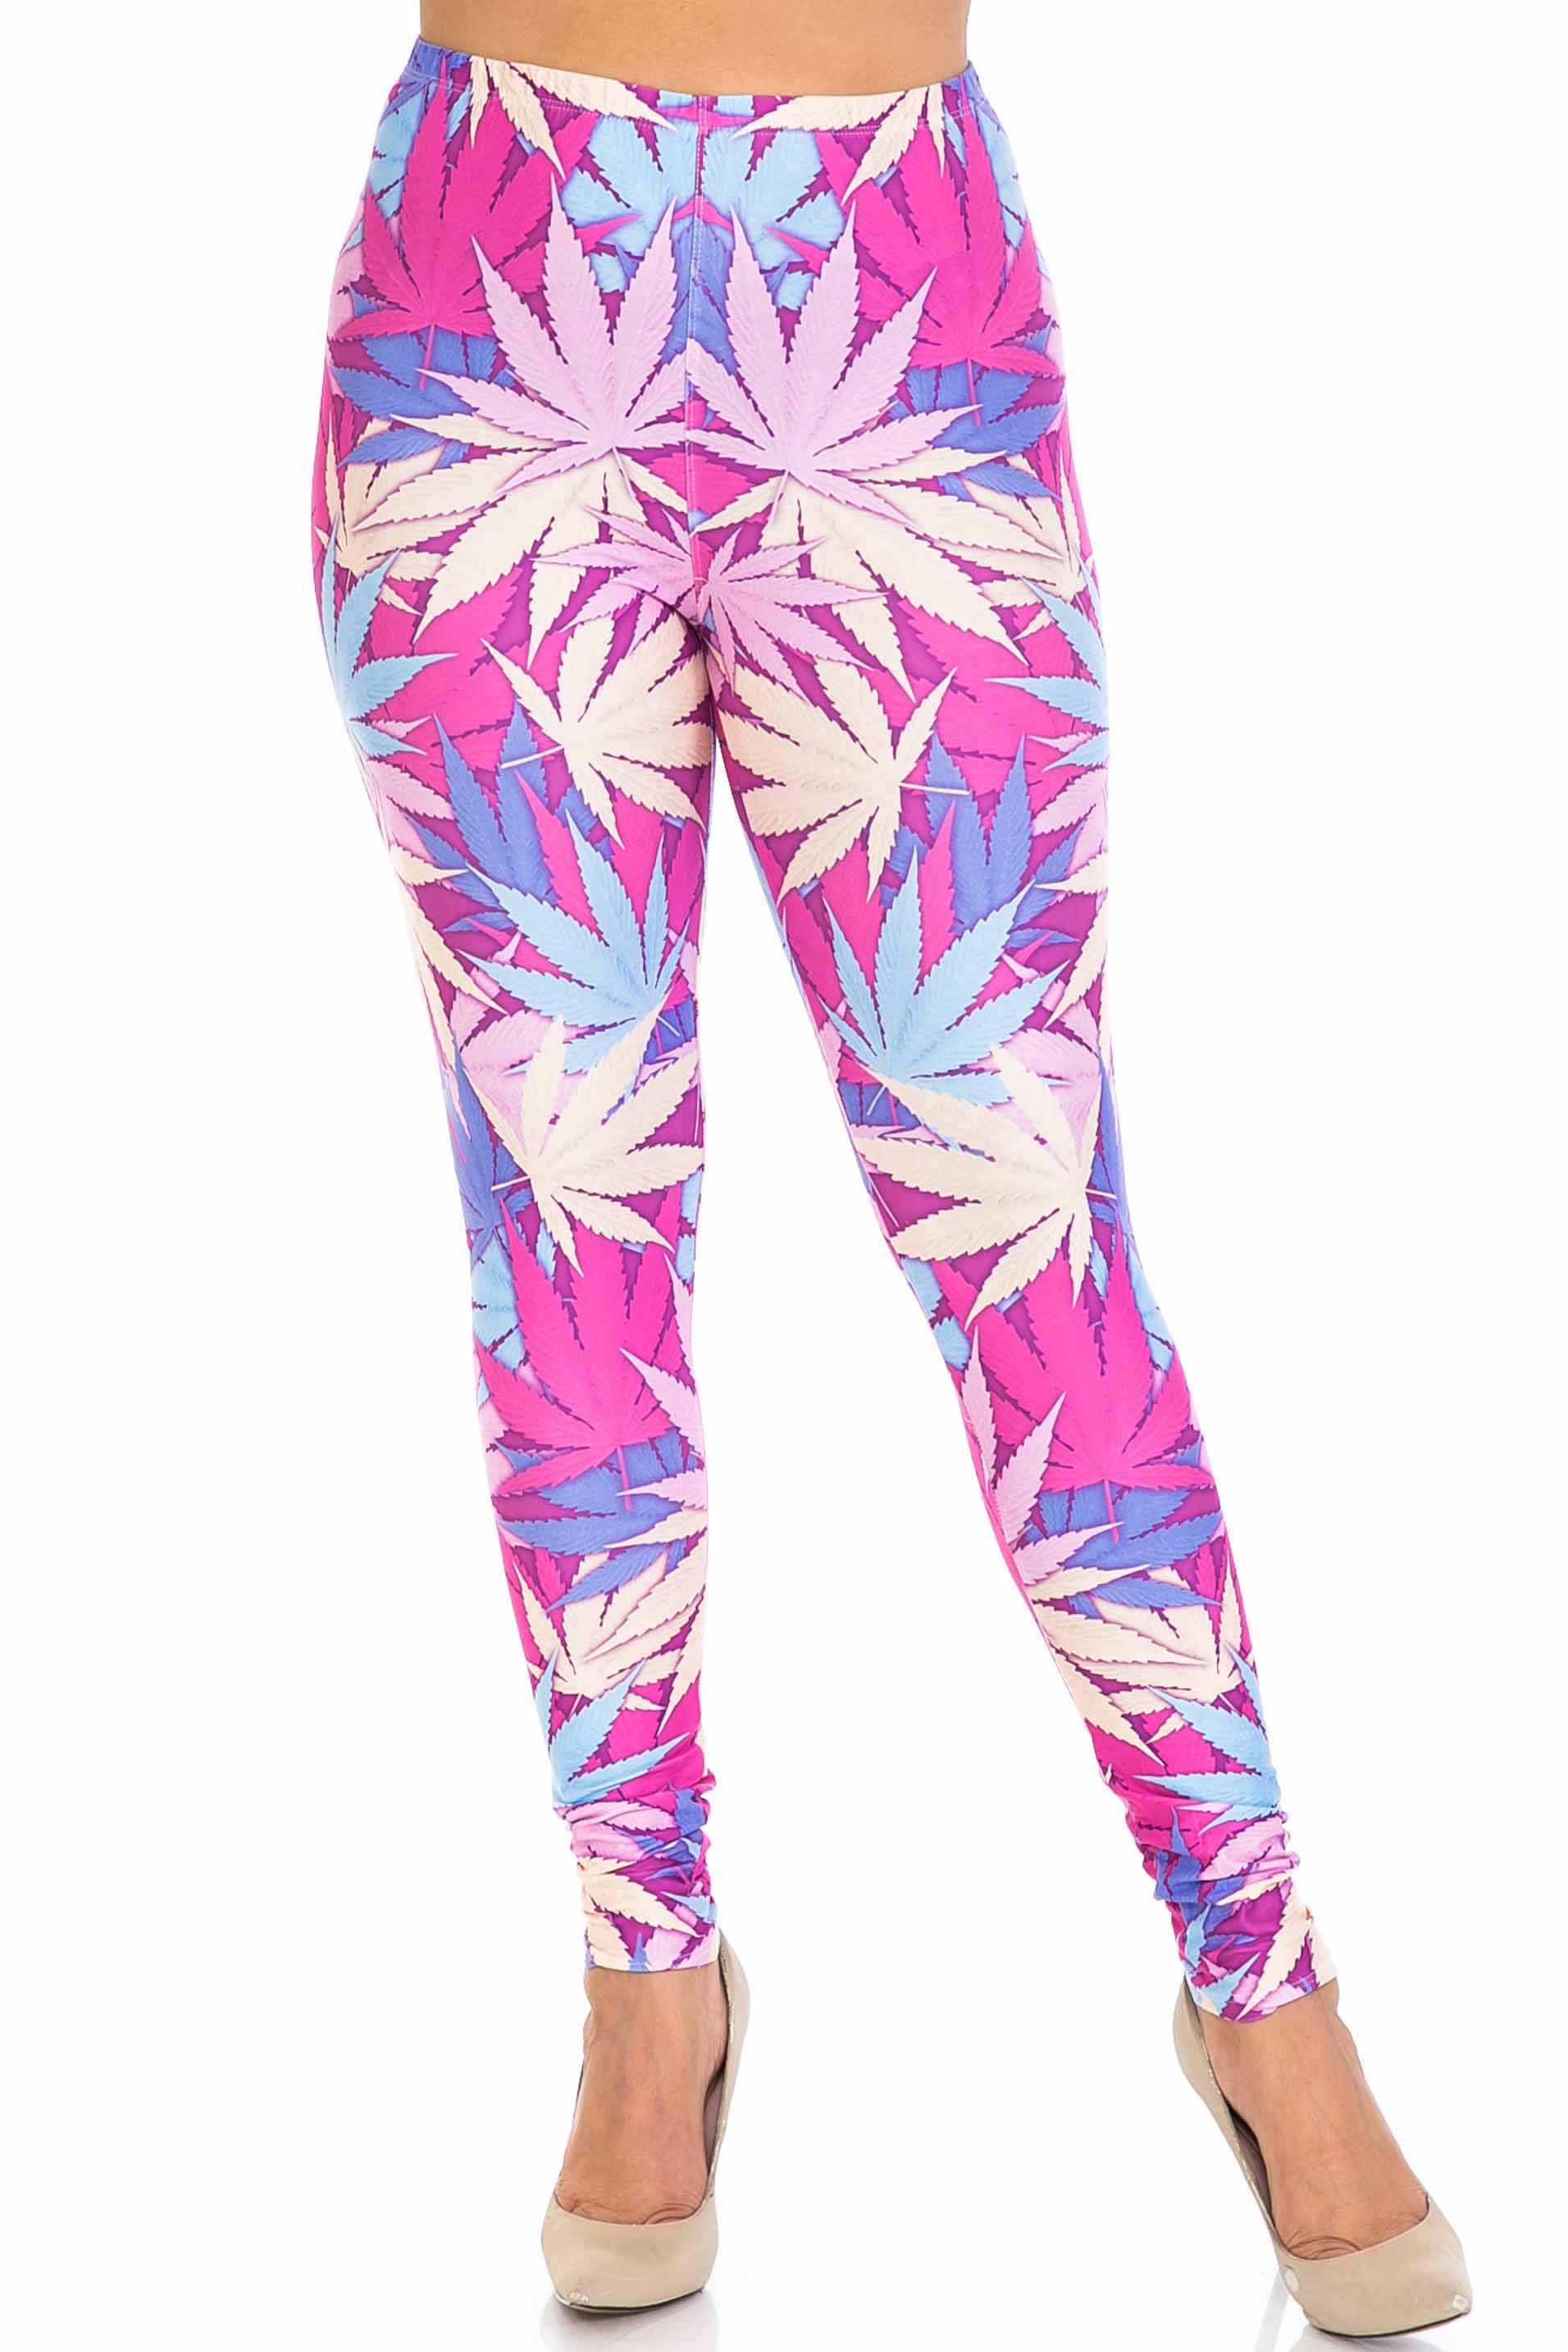 Wholesale Creamy Soft Pretty in Pink Marijuana Extra Plus Size Leggings - 3X-5X - USA Fashion™